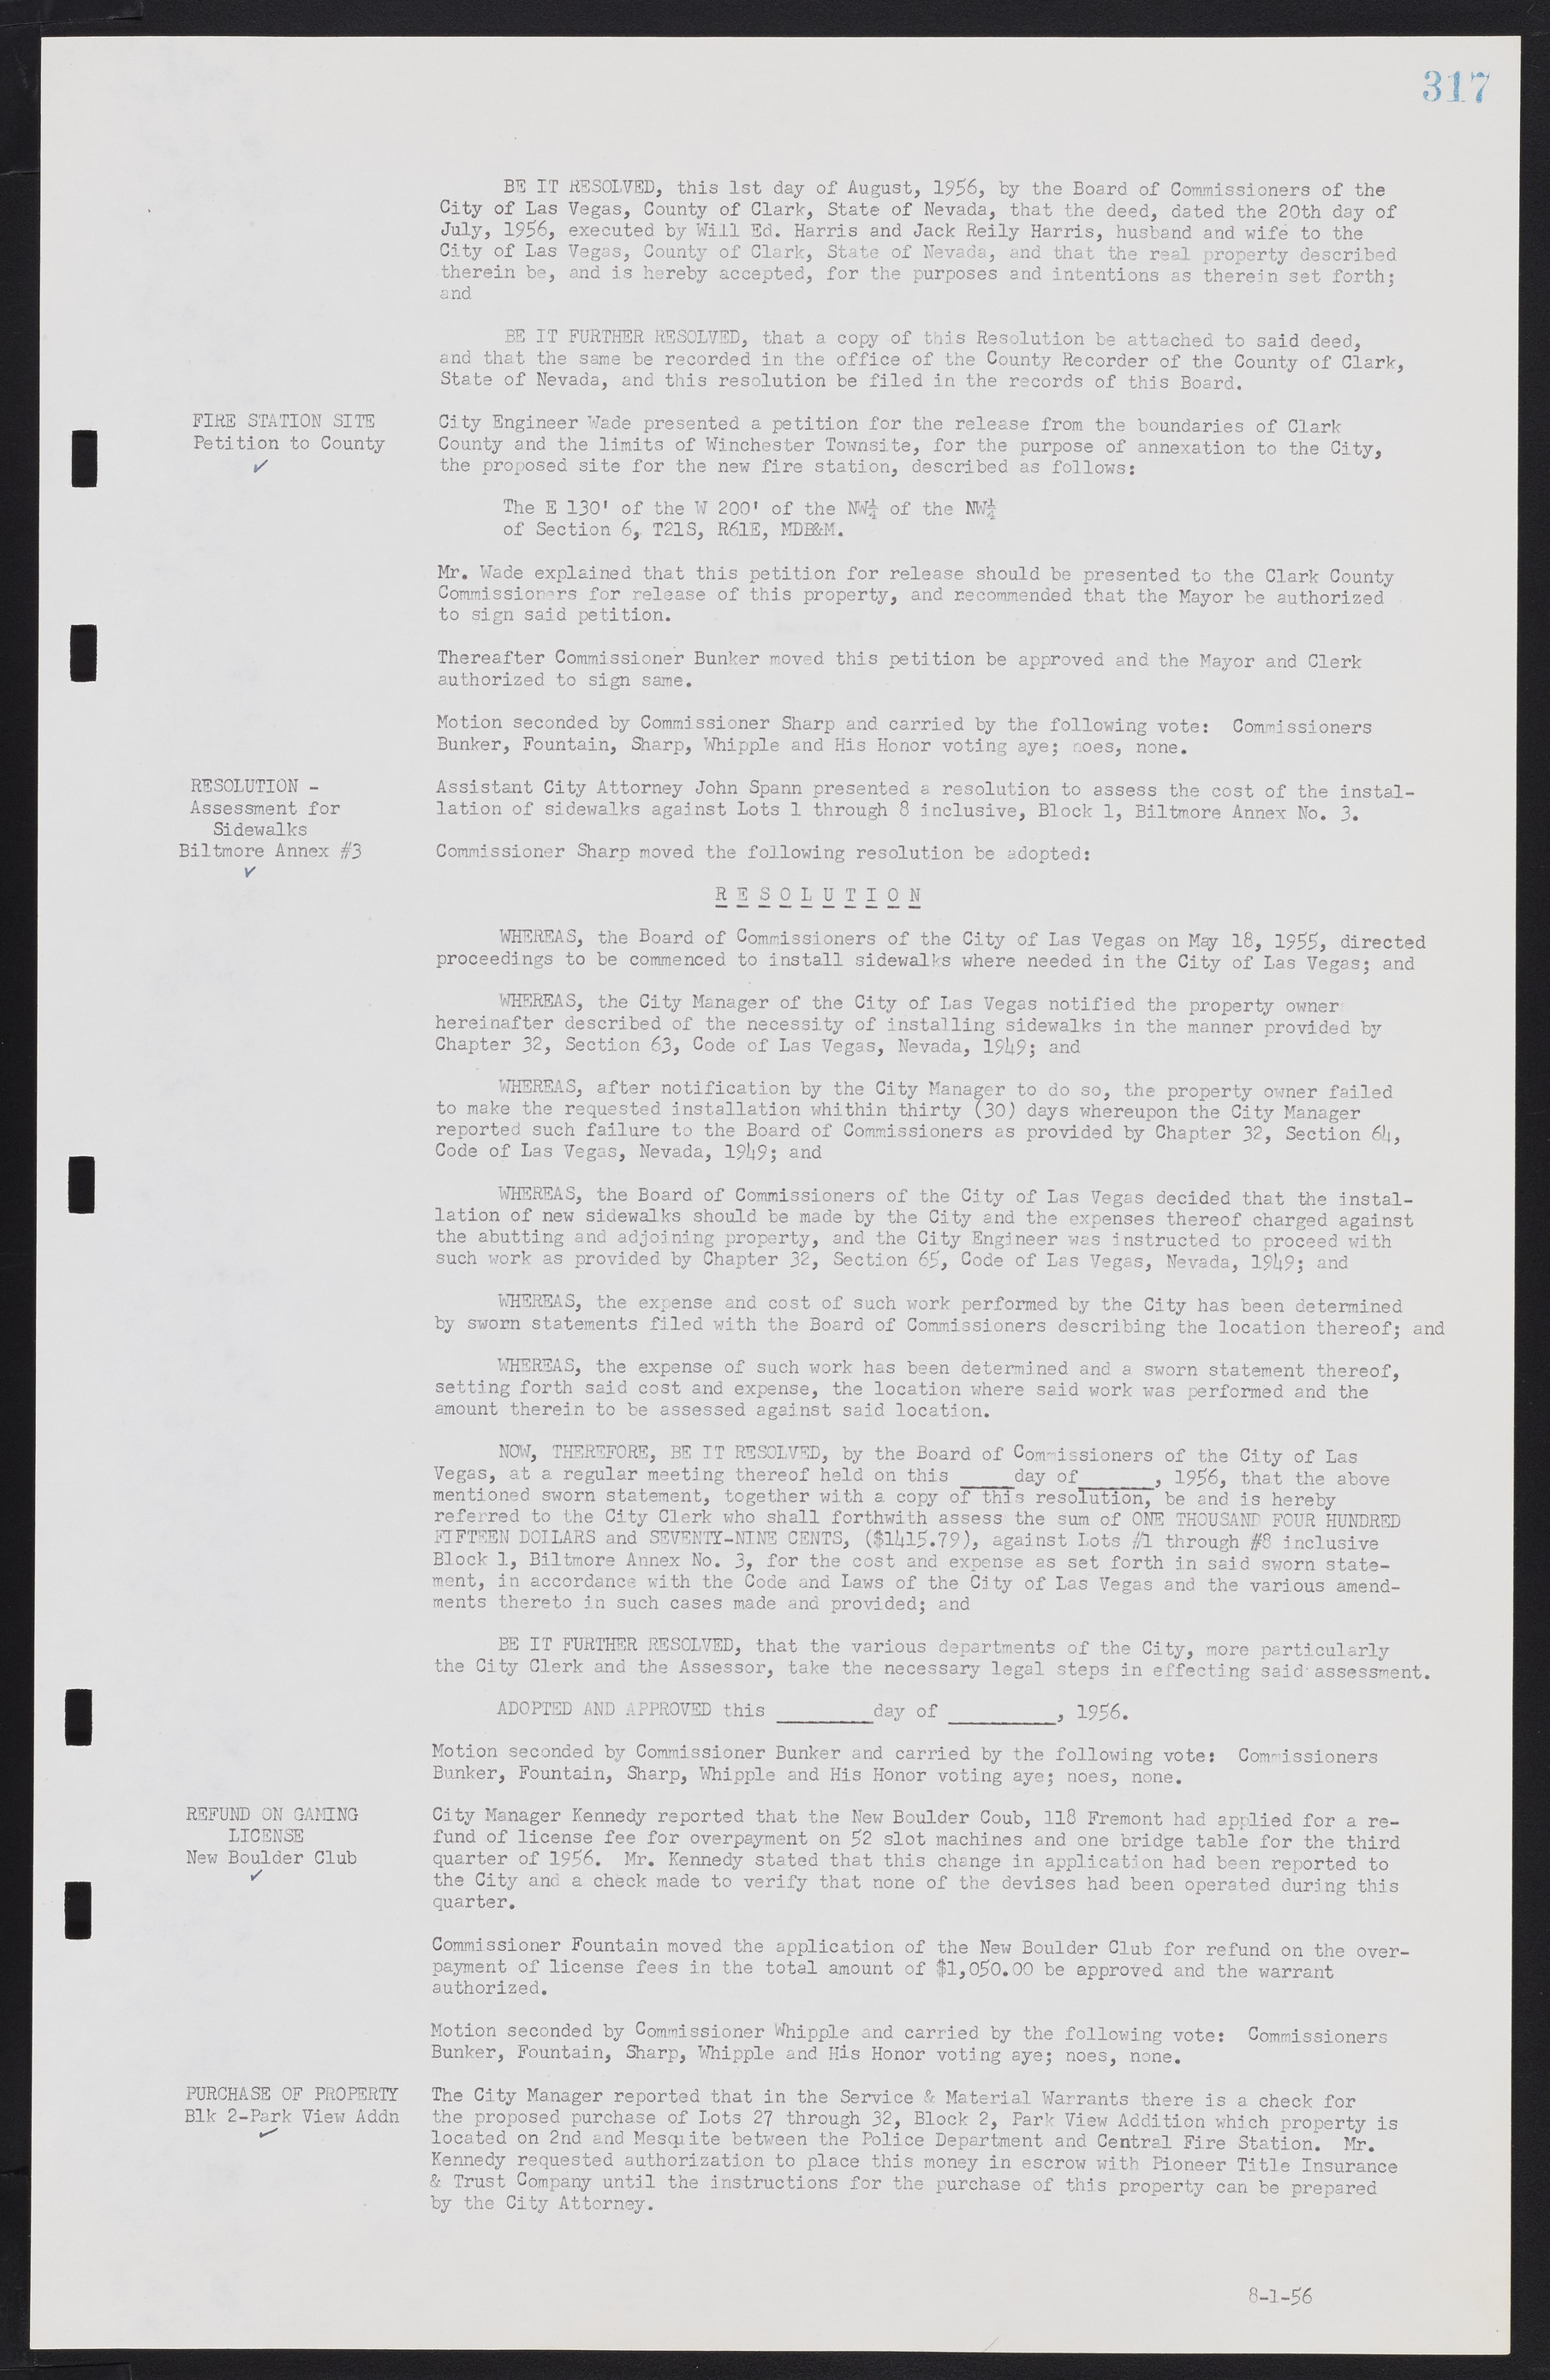 Las Vegas City Commission Minutes, September 21, 1955 to November 20, 1957, lvc000010-337